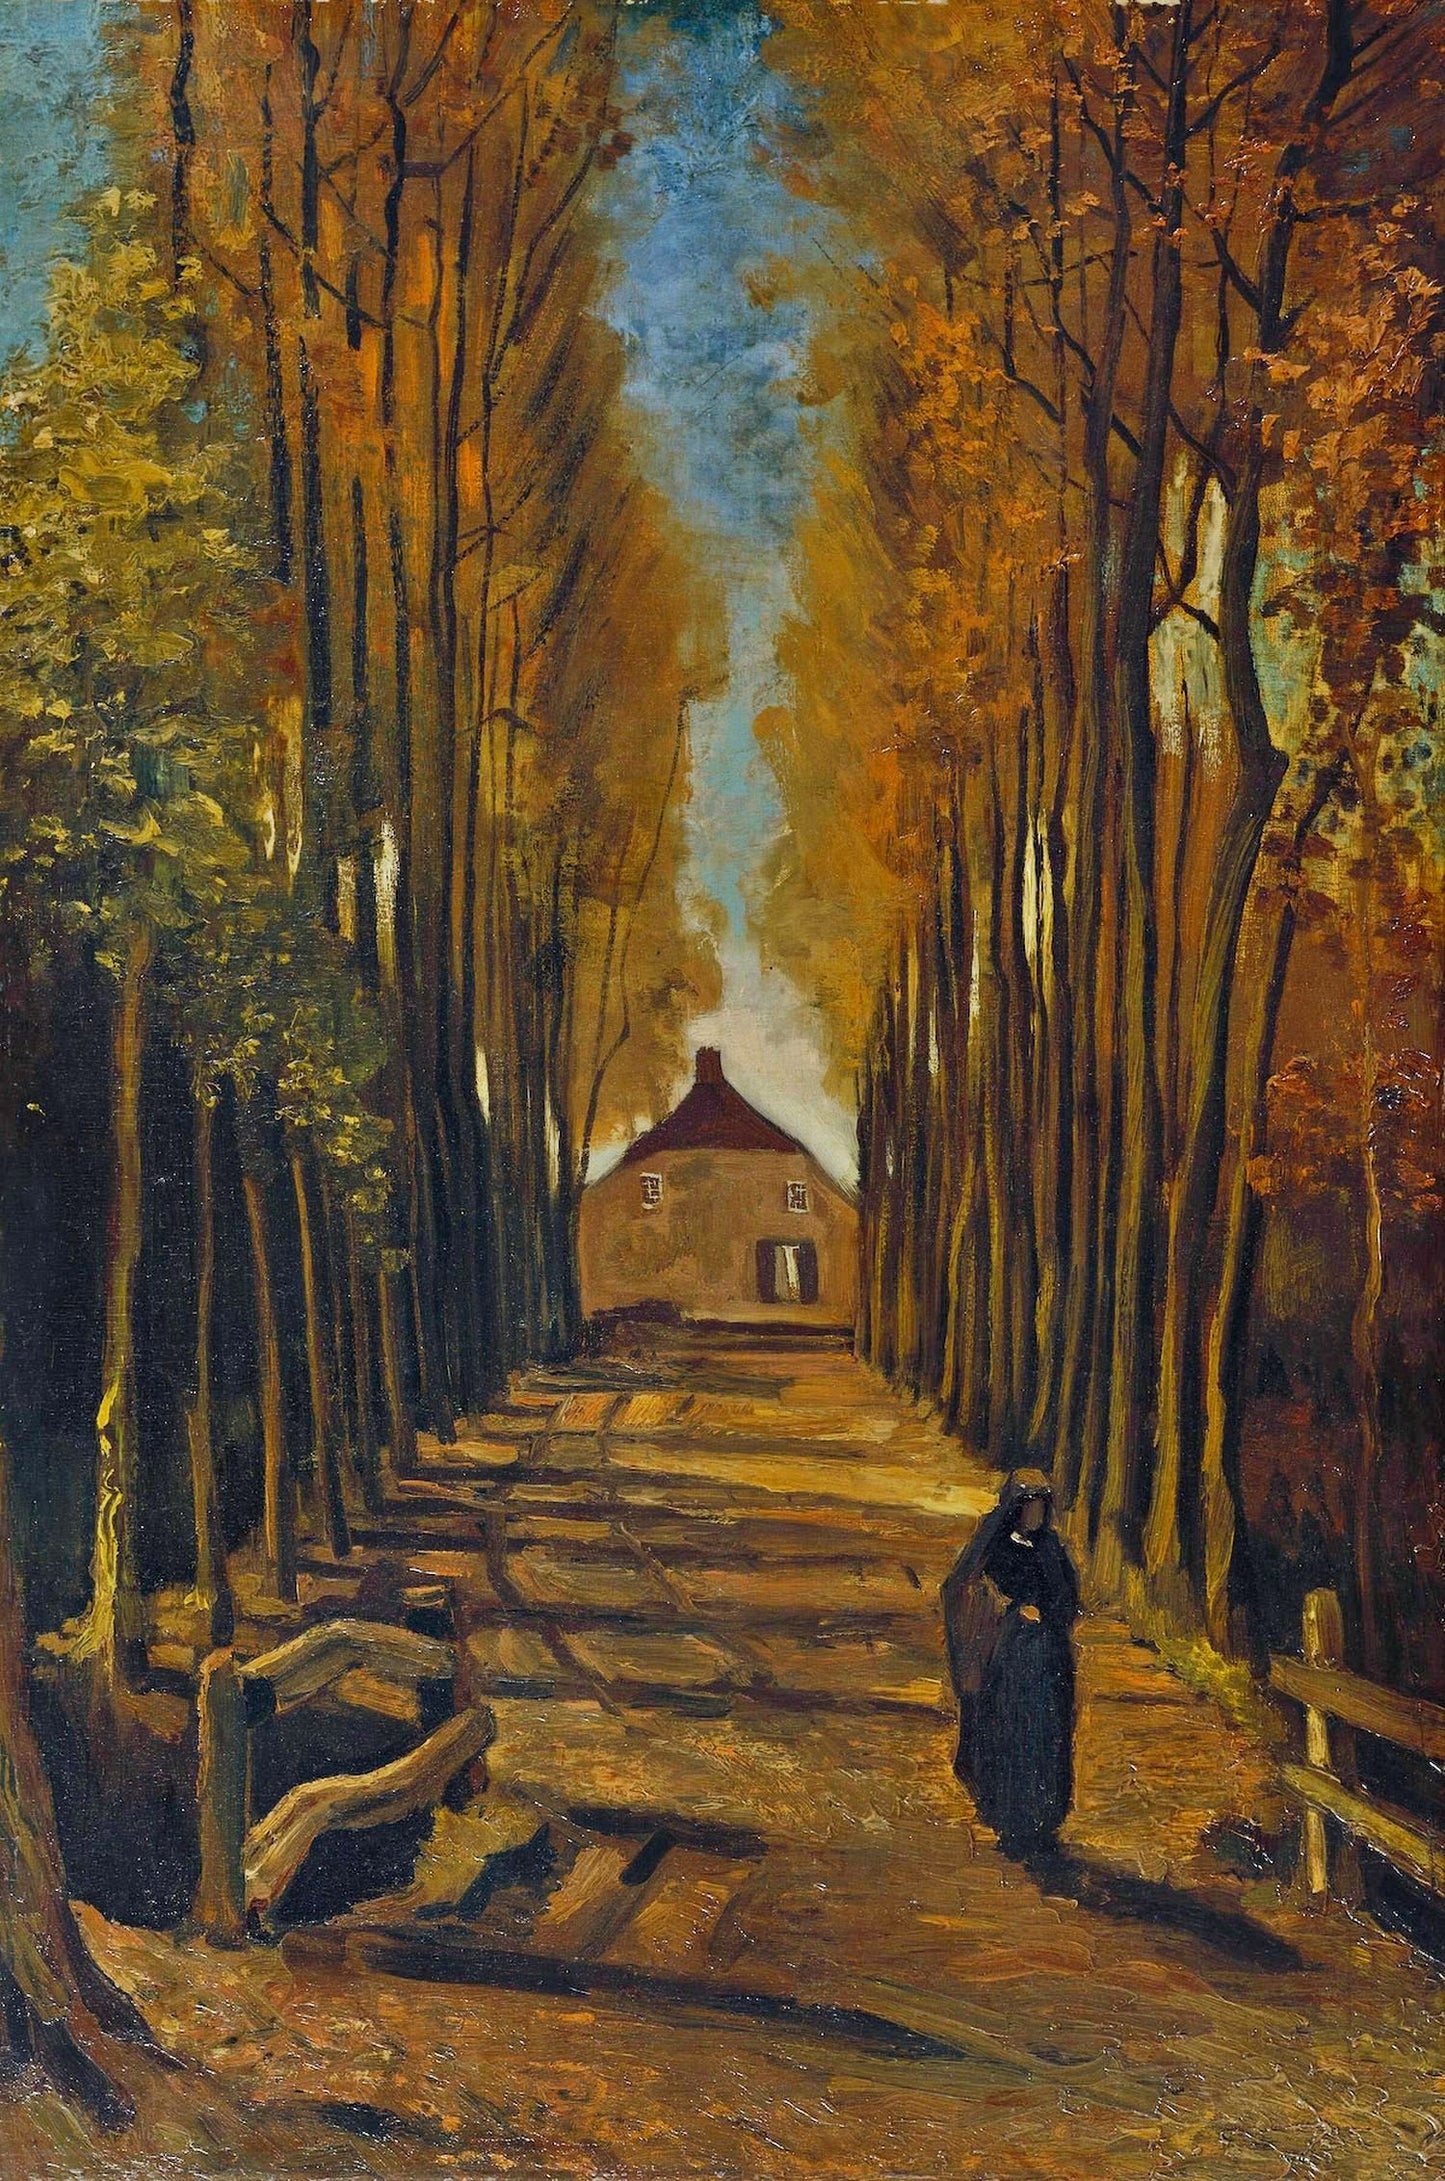 Avenue of Poplars at Sunset, 1884